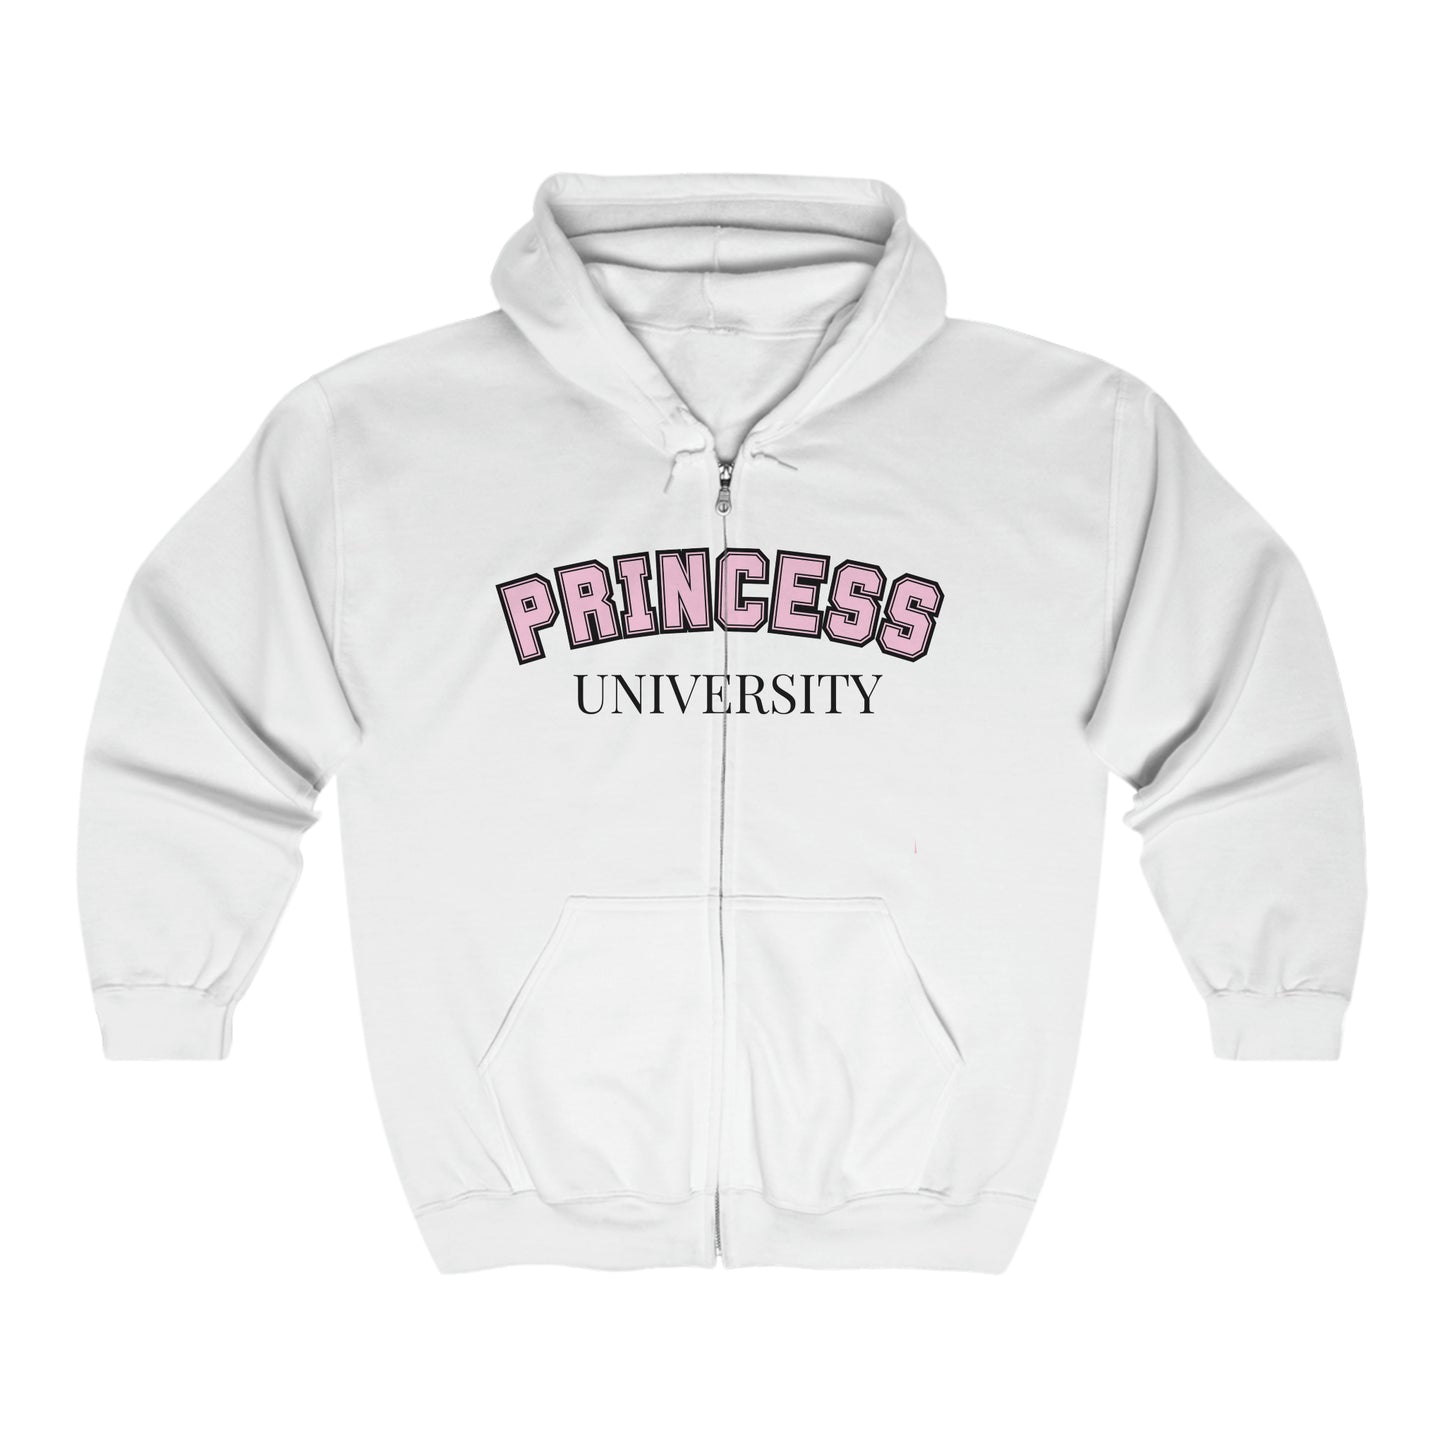 Princess university jacket